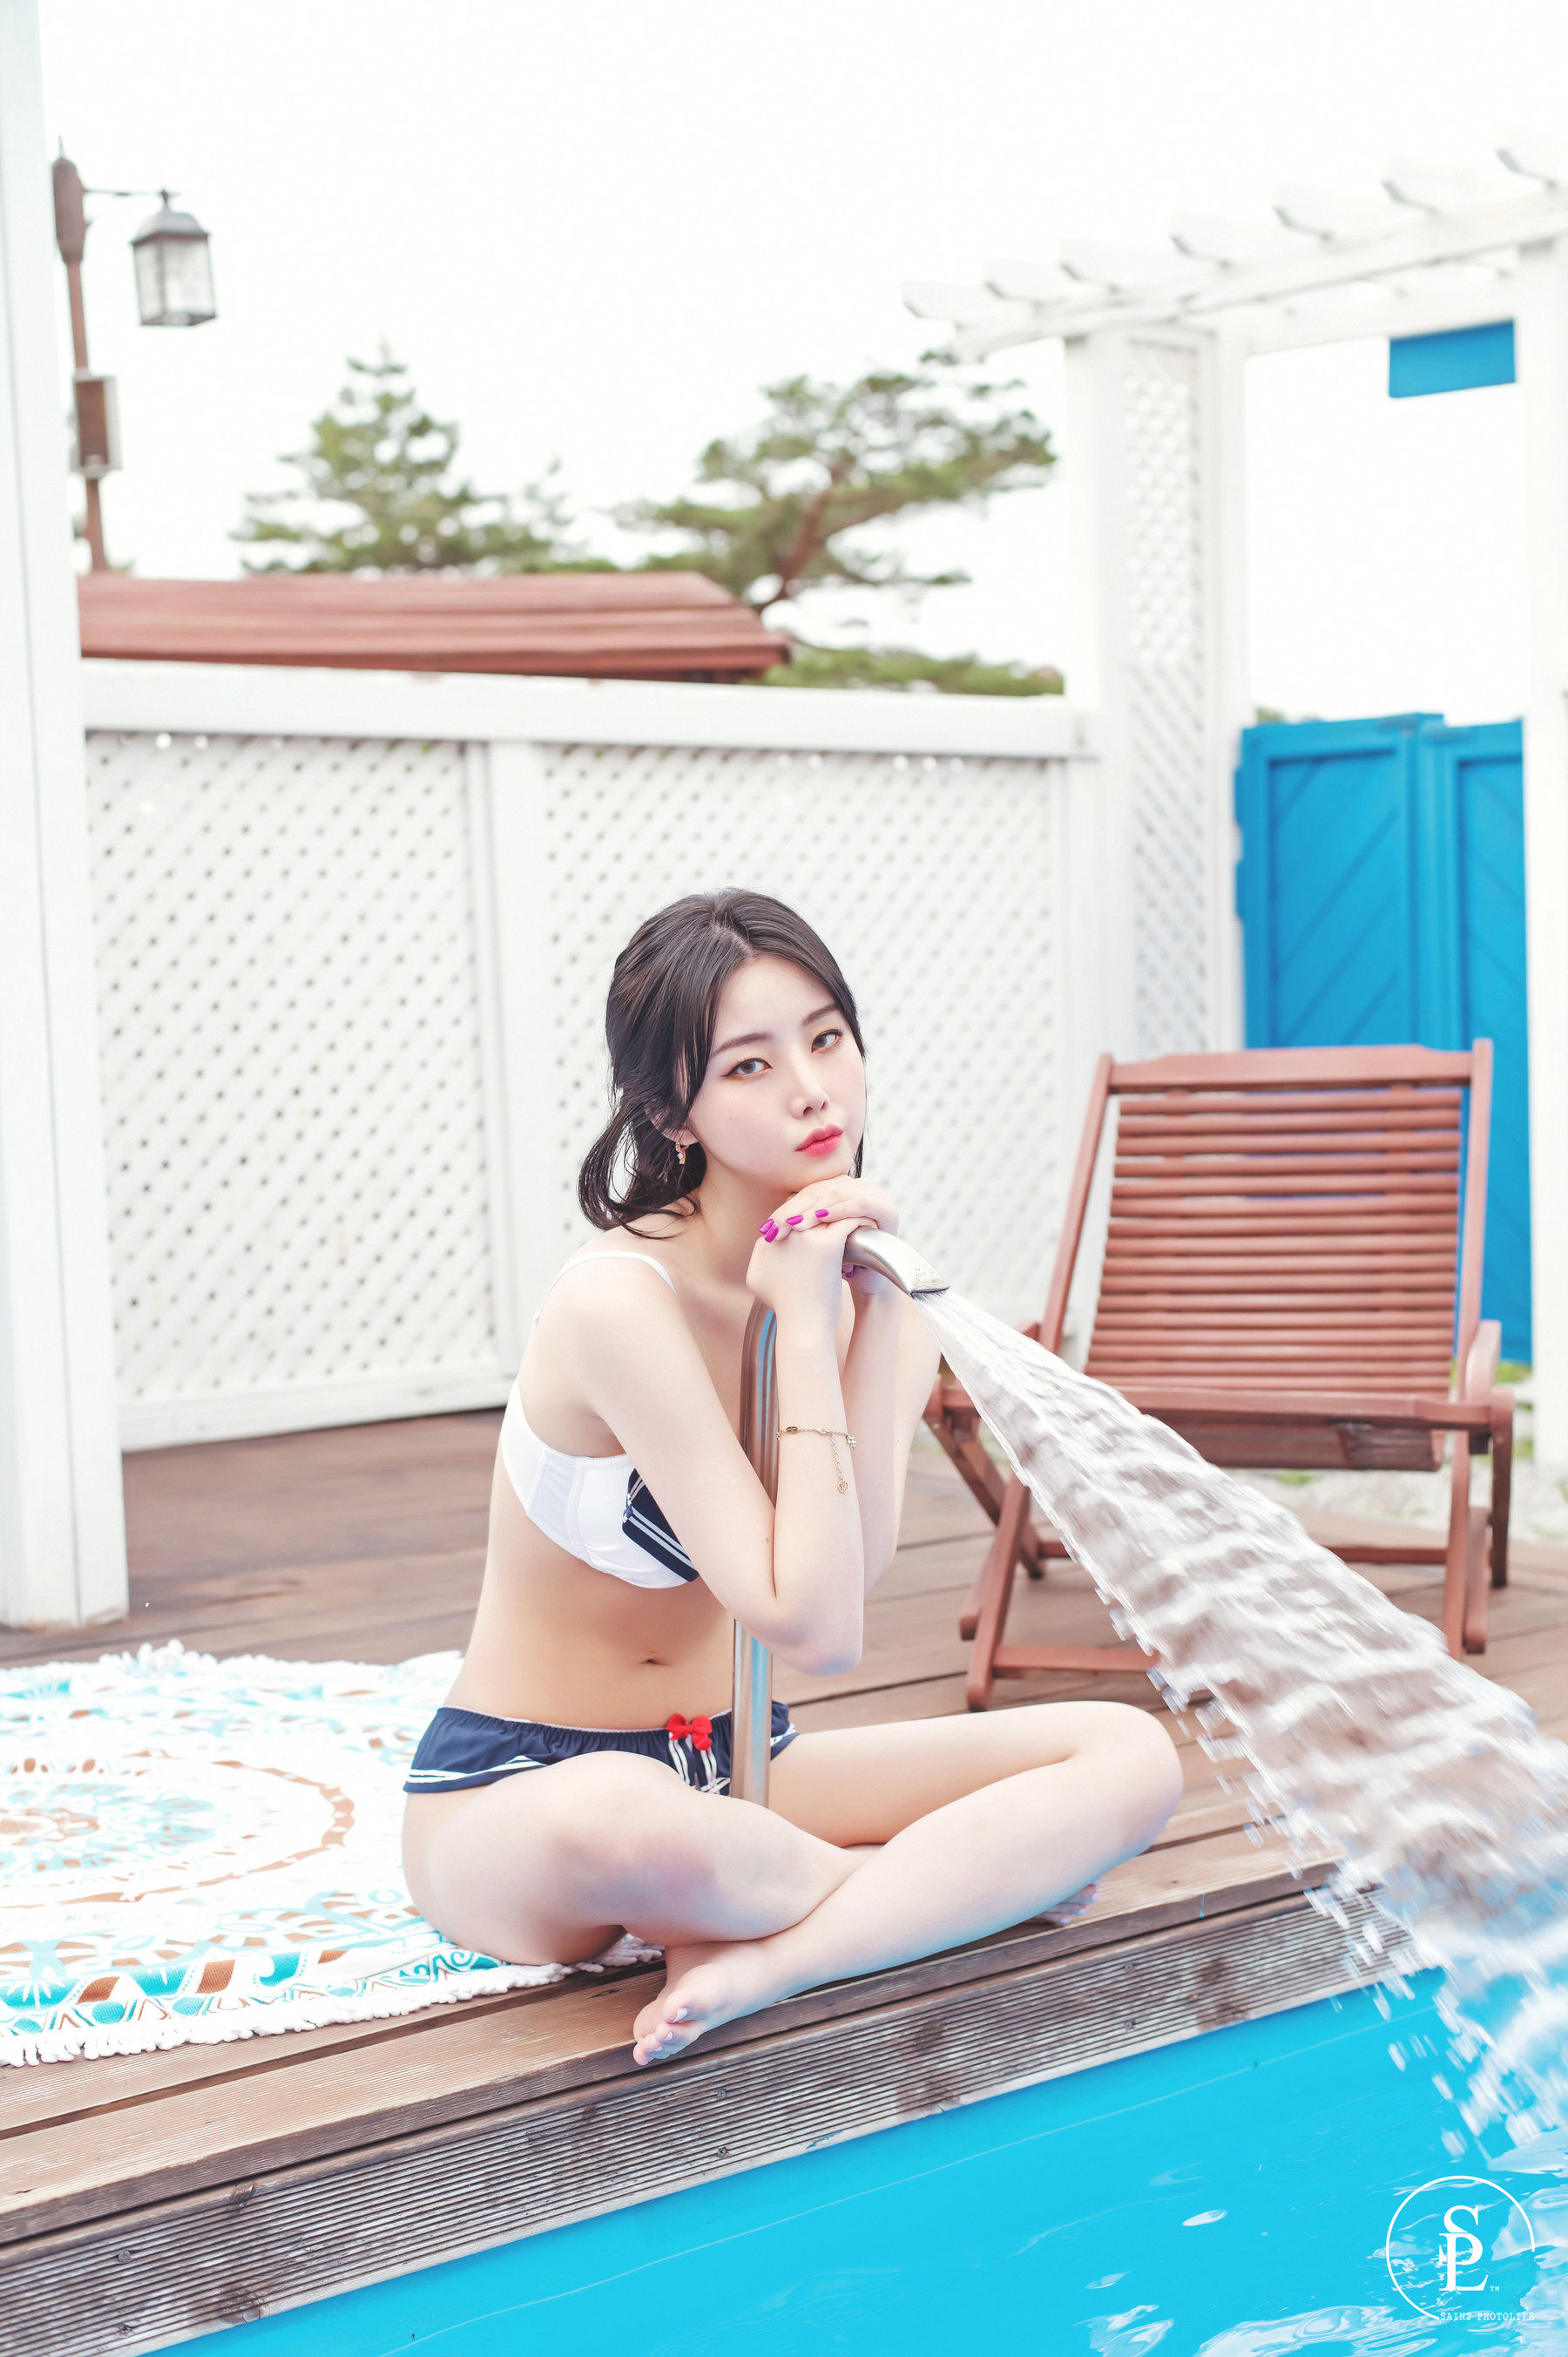 [saintphotolife] Yuna - No.31 Hello! Yangyang  第18张